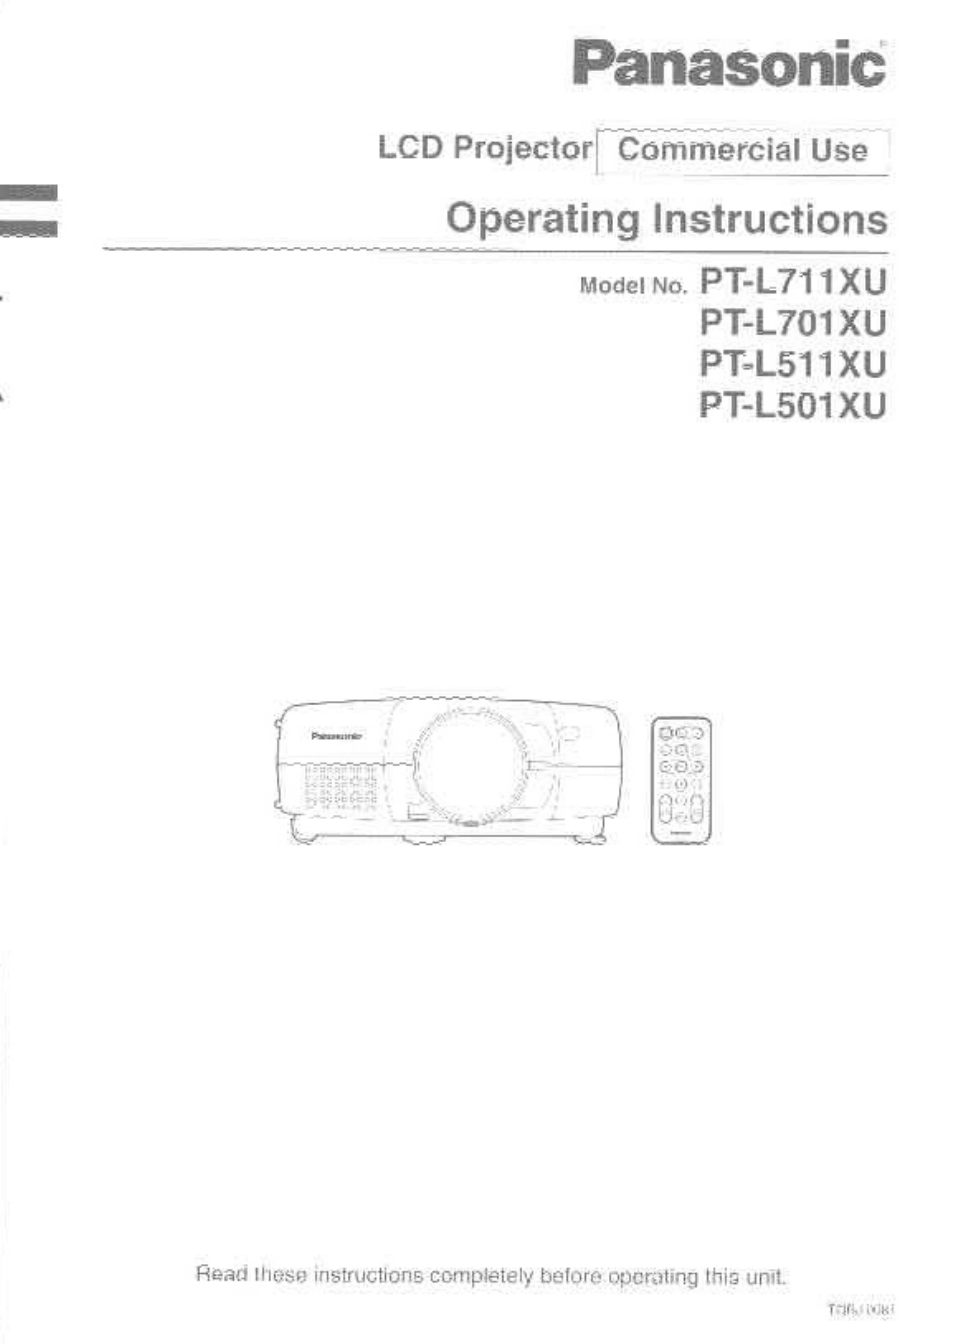 Panasonic DIGITAL MULTIMEDIA PROJECTOR PT-L501XU User Manual | 64 pages